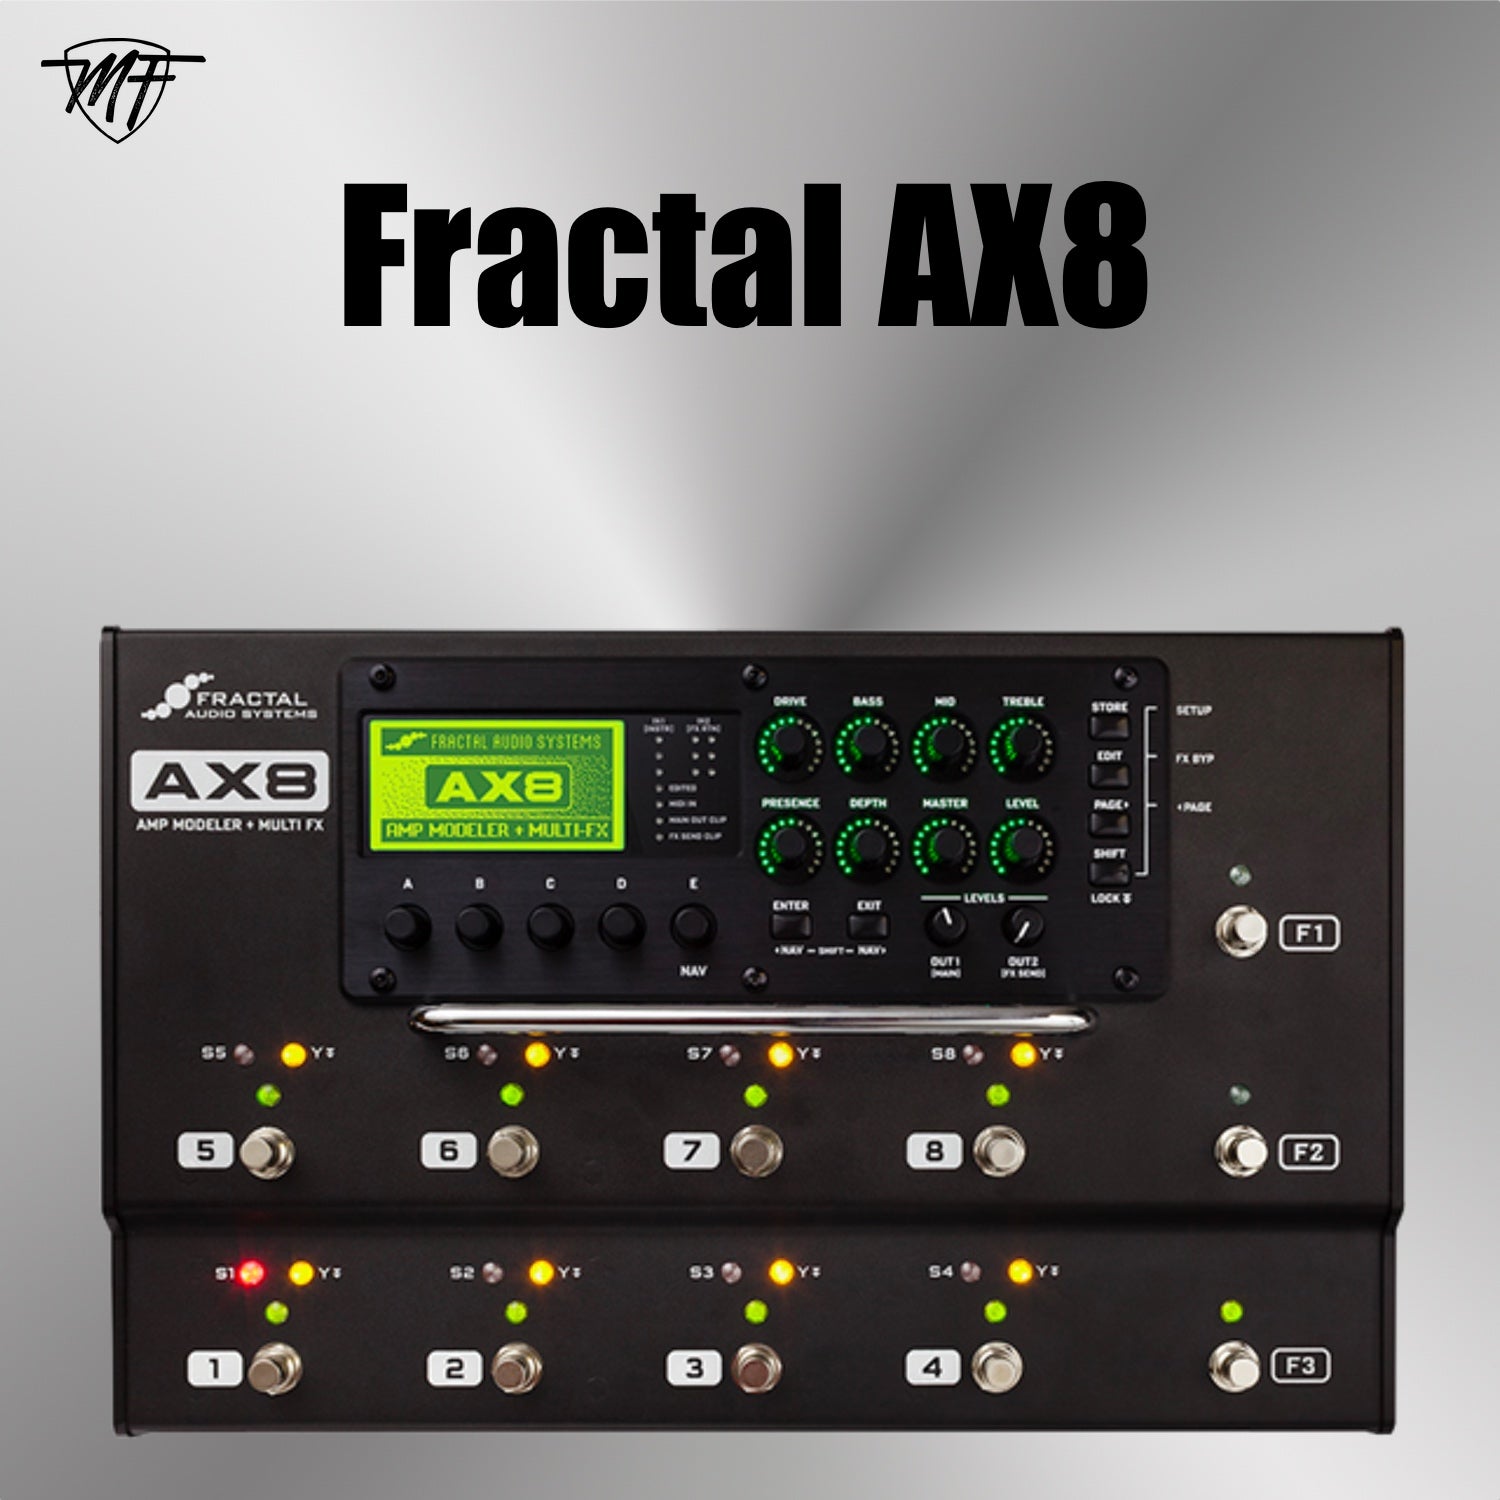 Fractal AX8